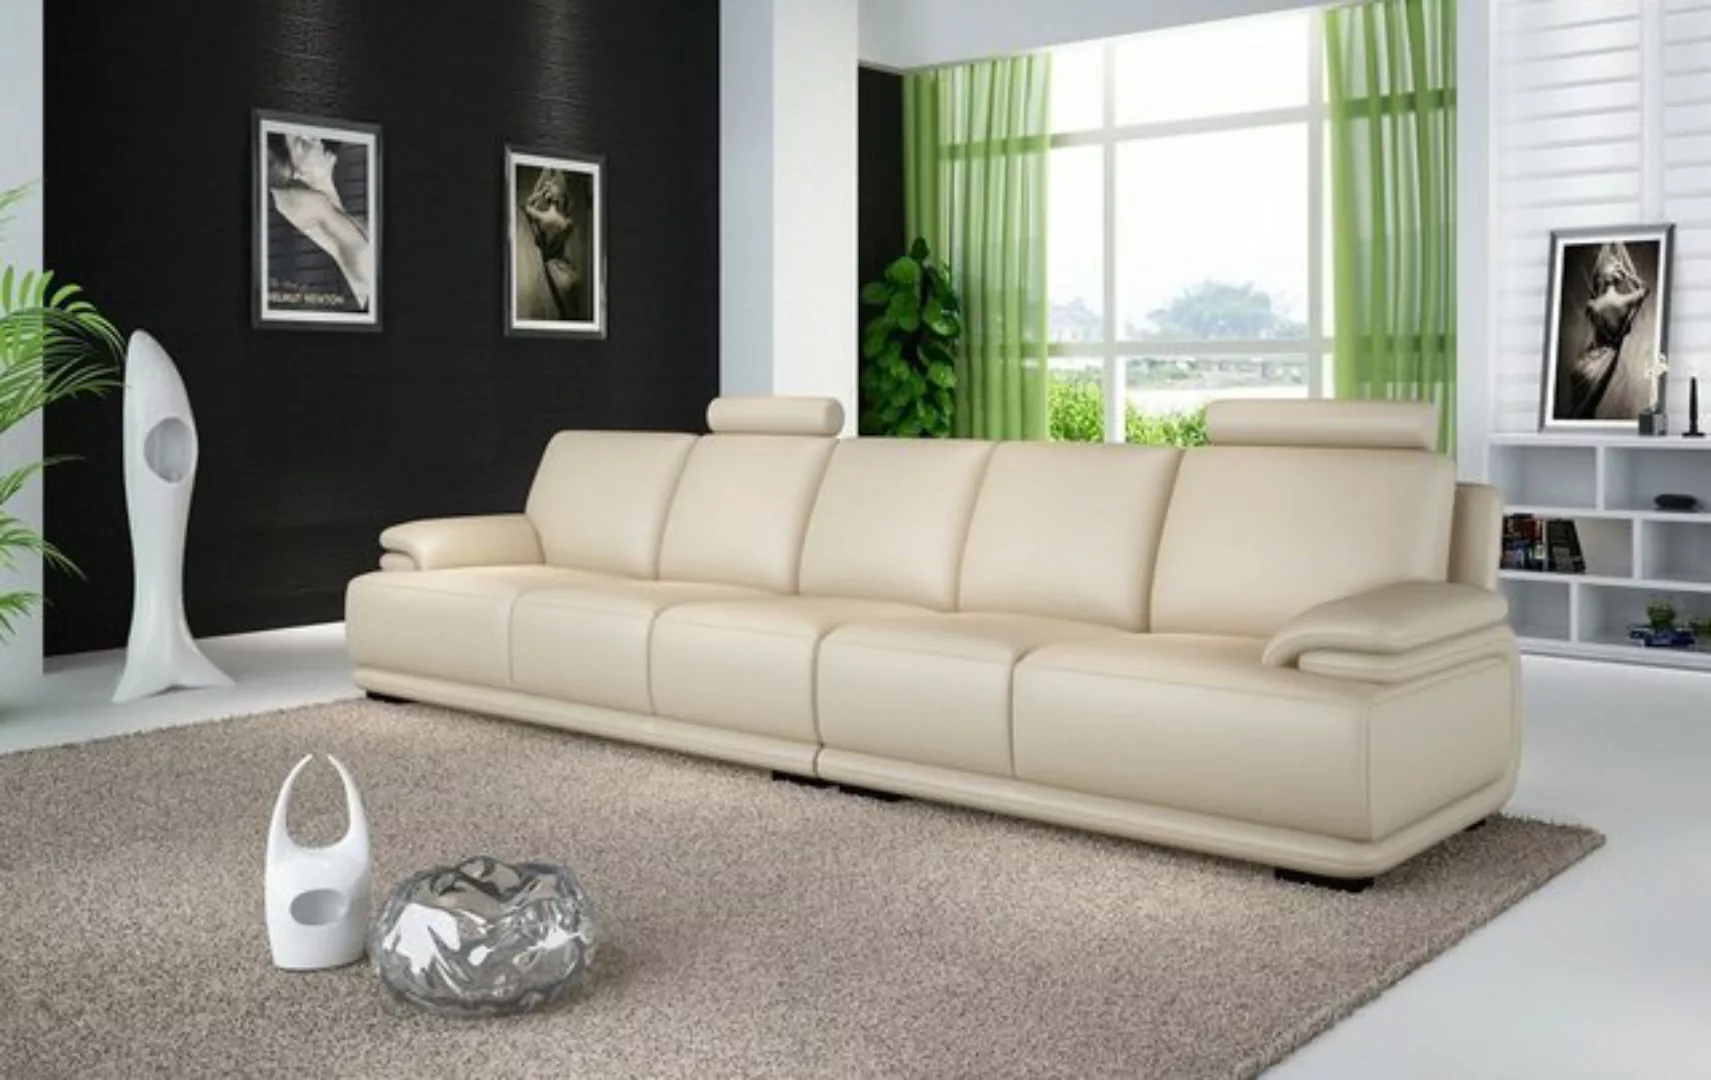 JVmoebel Sofa Sofa Couch Ecke Polster xxl big long sofa 6 Sitzplätze couche günstig online kaufen